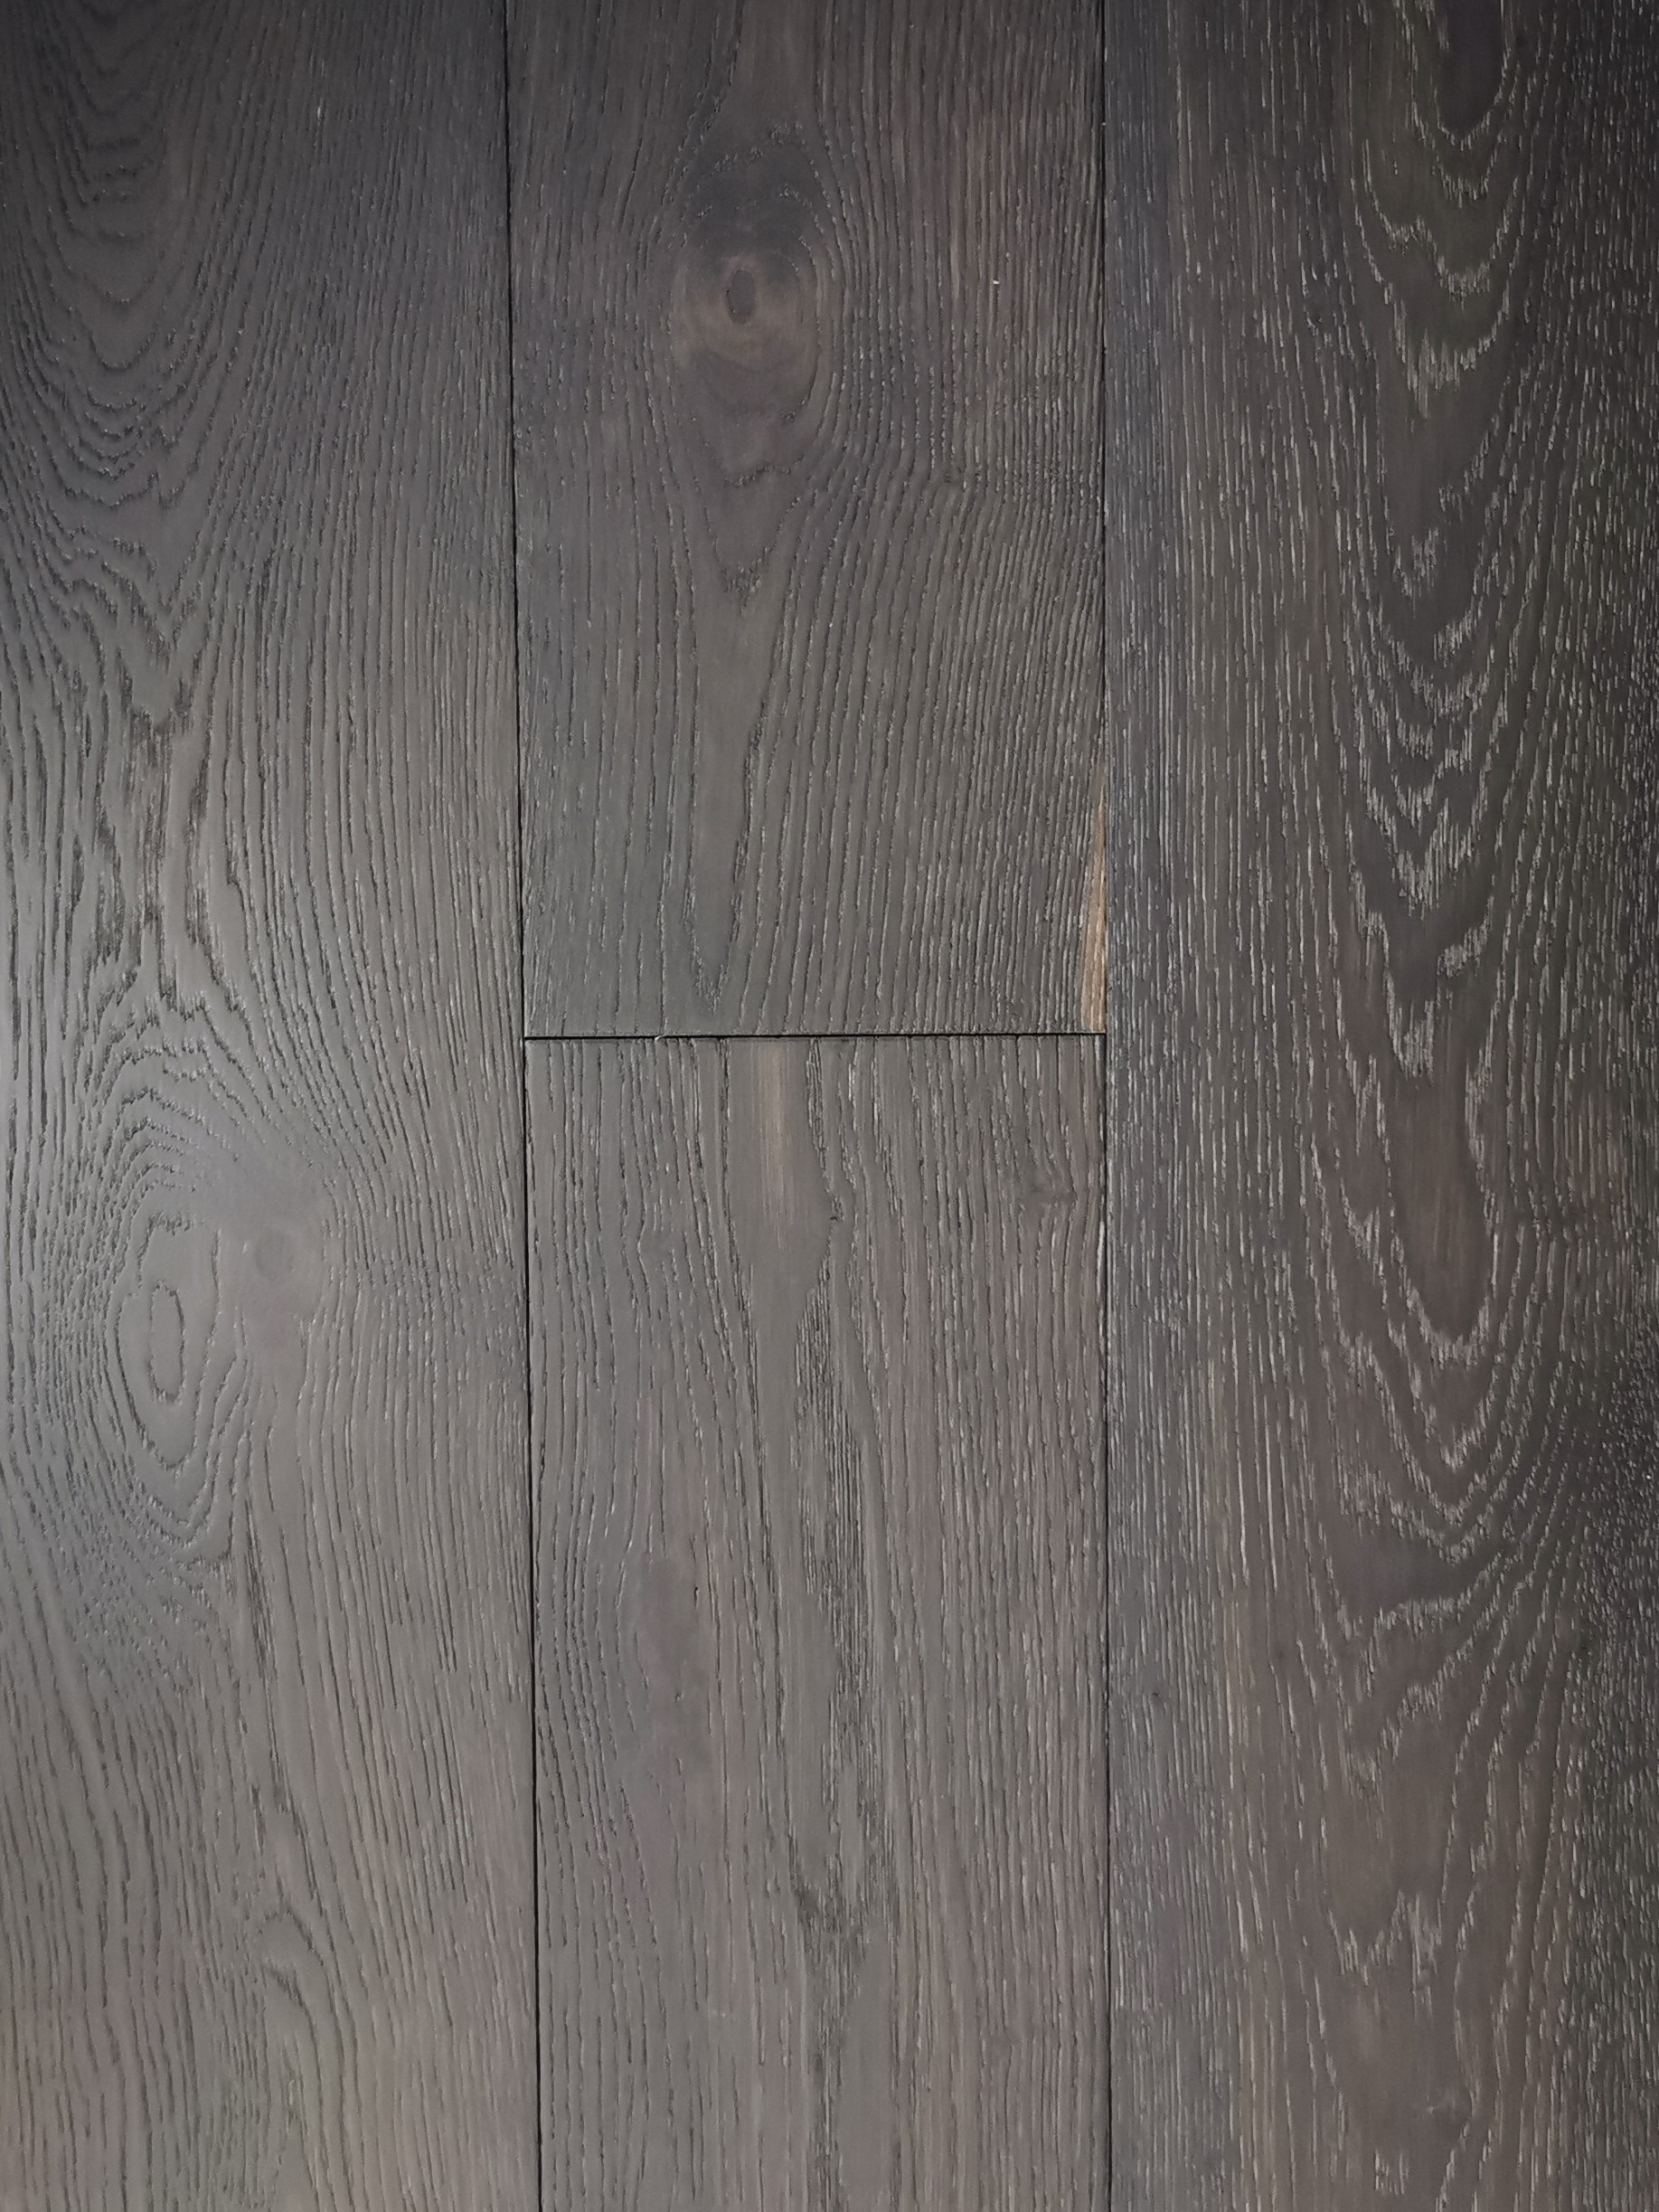 Northernest Flooring European White Oak, Long Length Engineered Hardwood Flooring